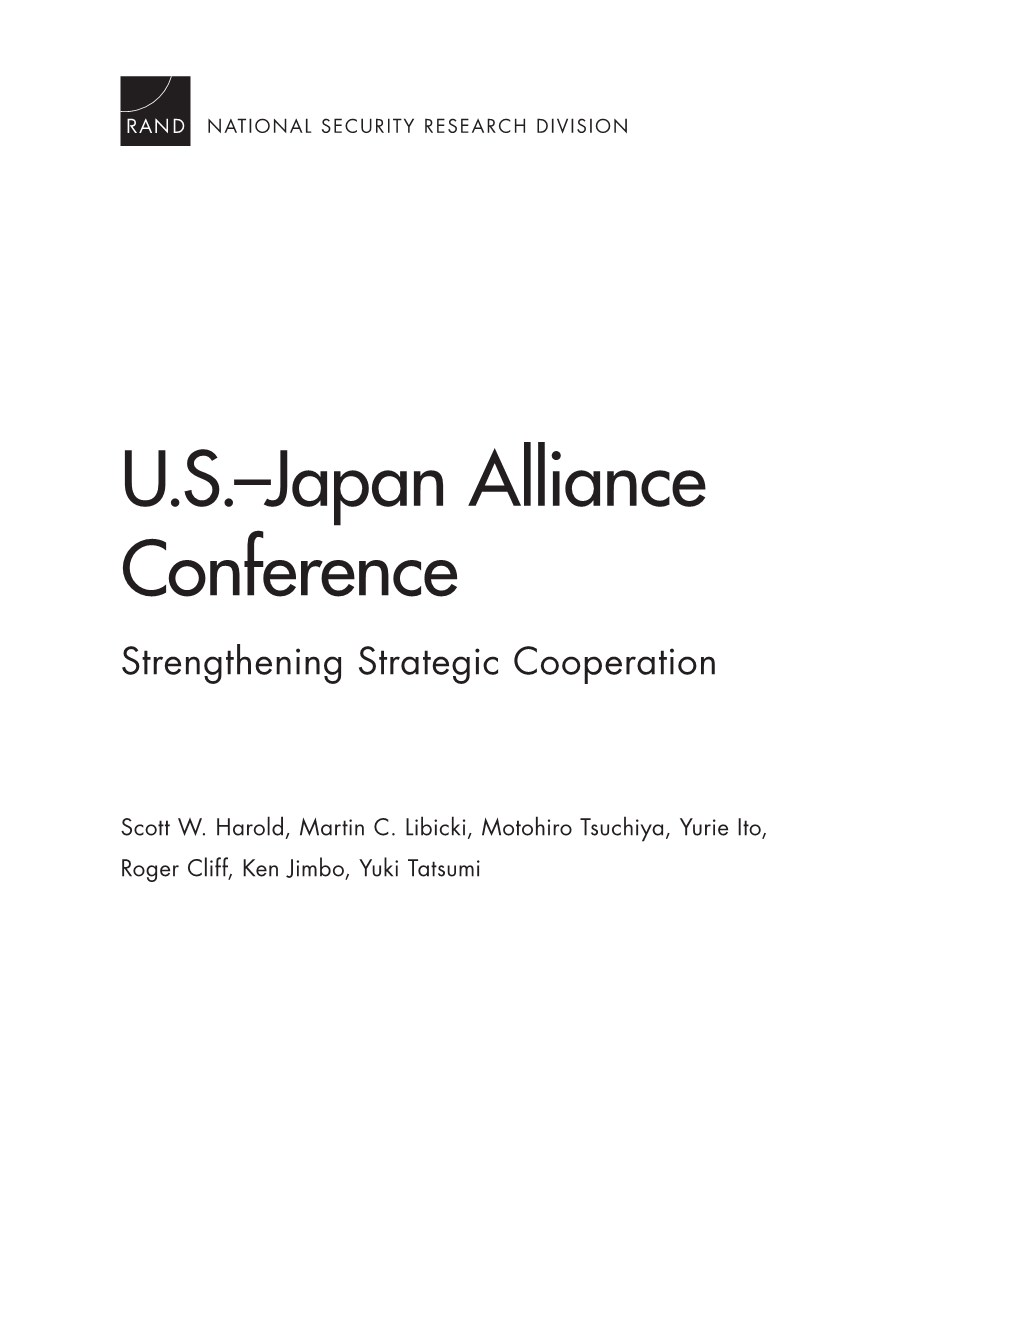 U.S.-Japan Alliance Conference: Strengthening Strategic Cooperation